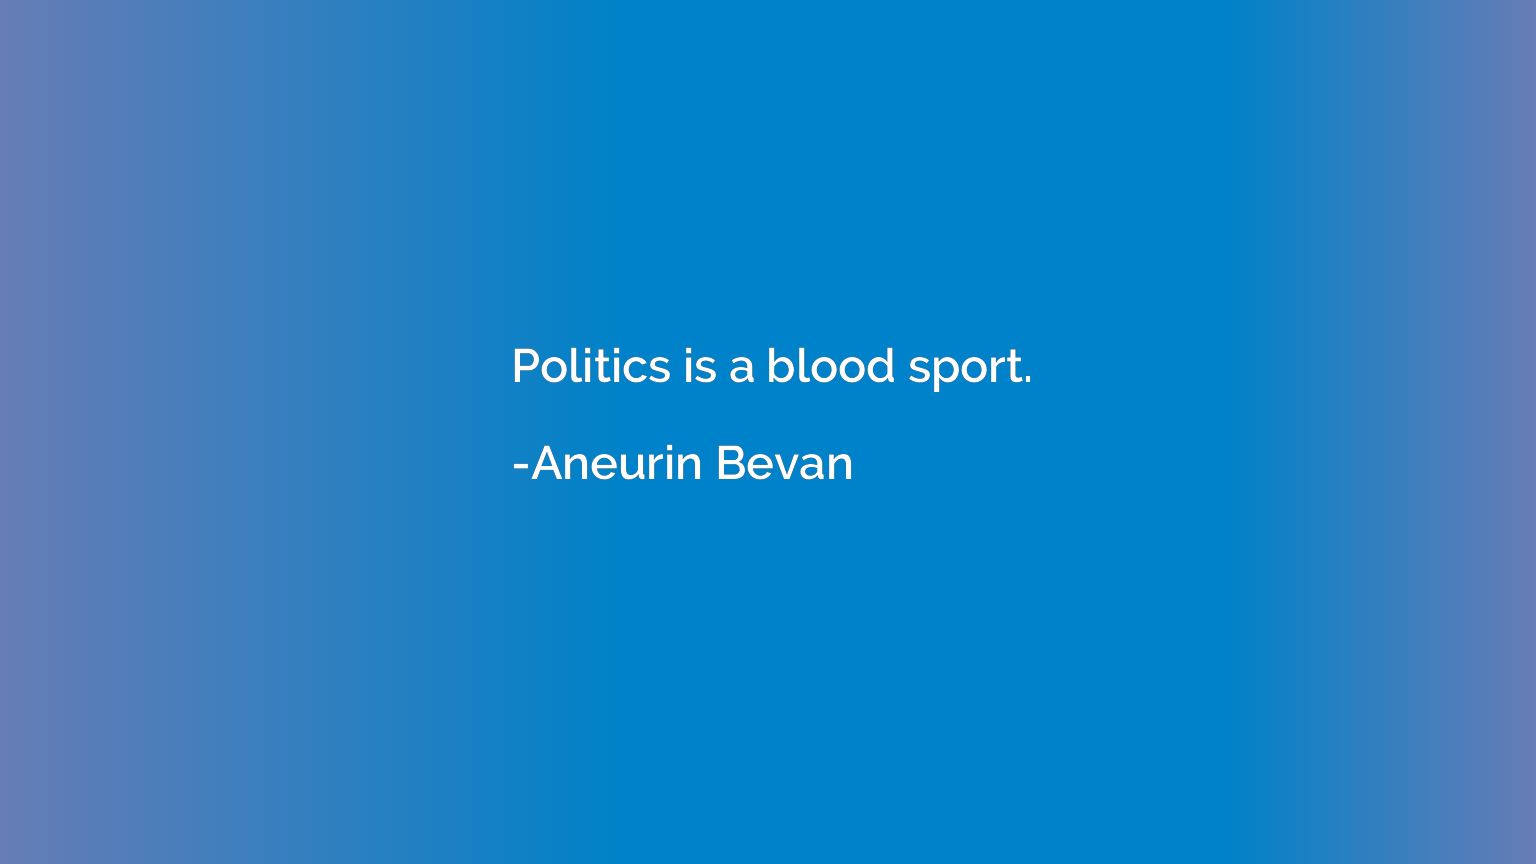 Politics is a blood sport.